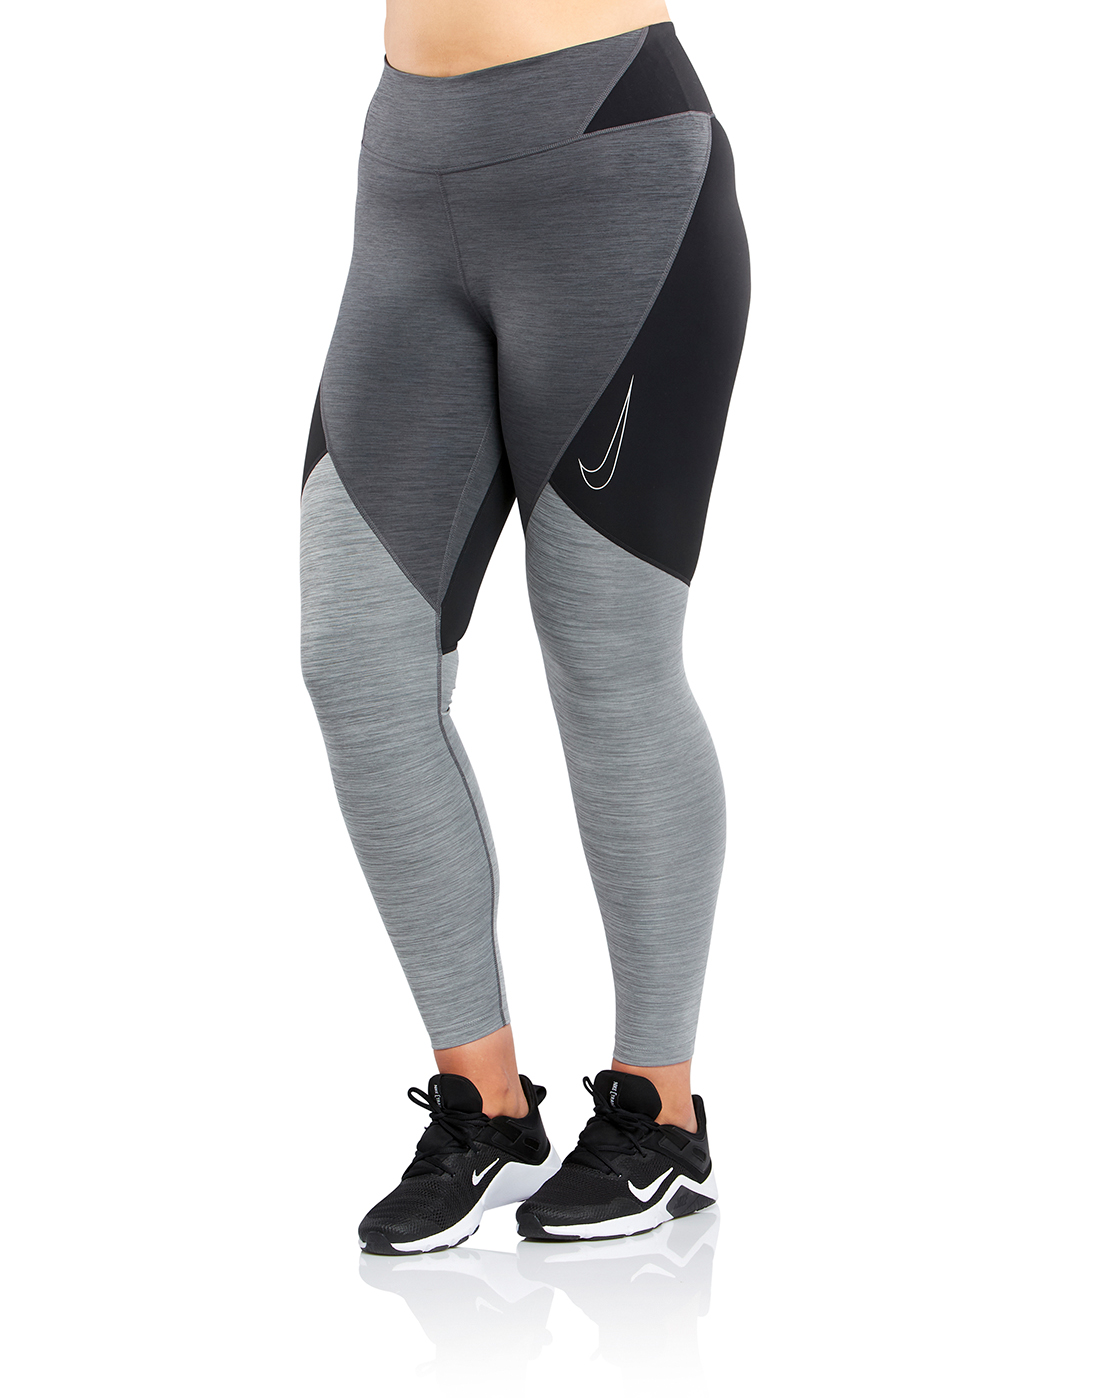 Nike Womens One Novelty Leggings - Grey 